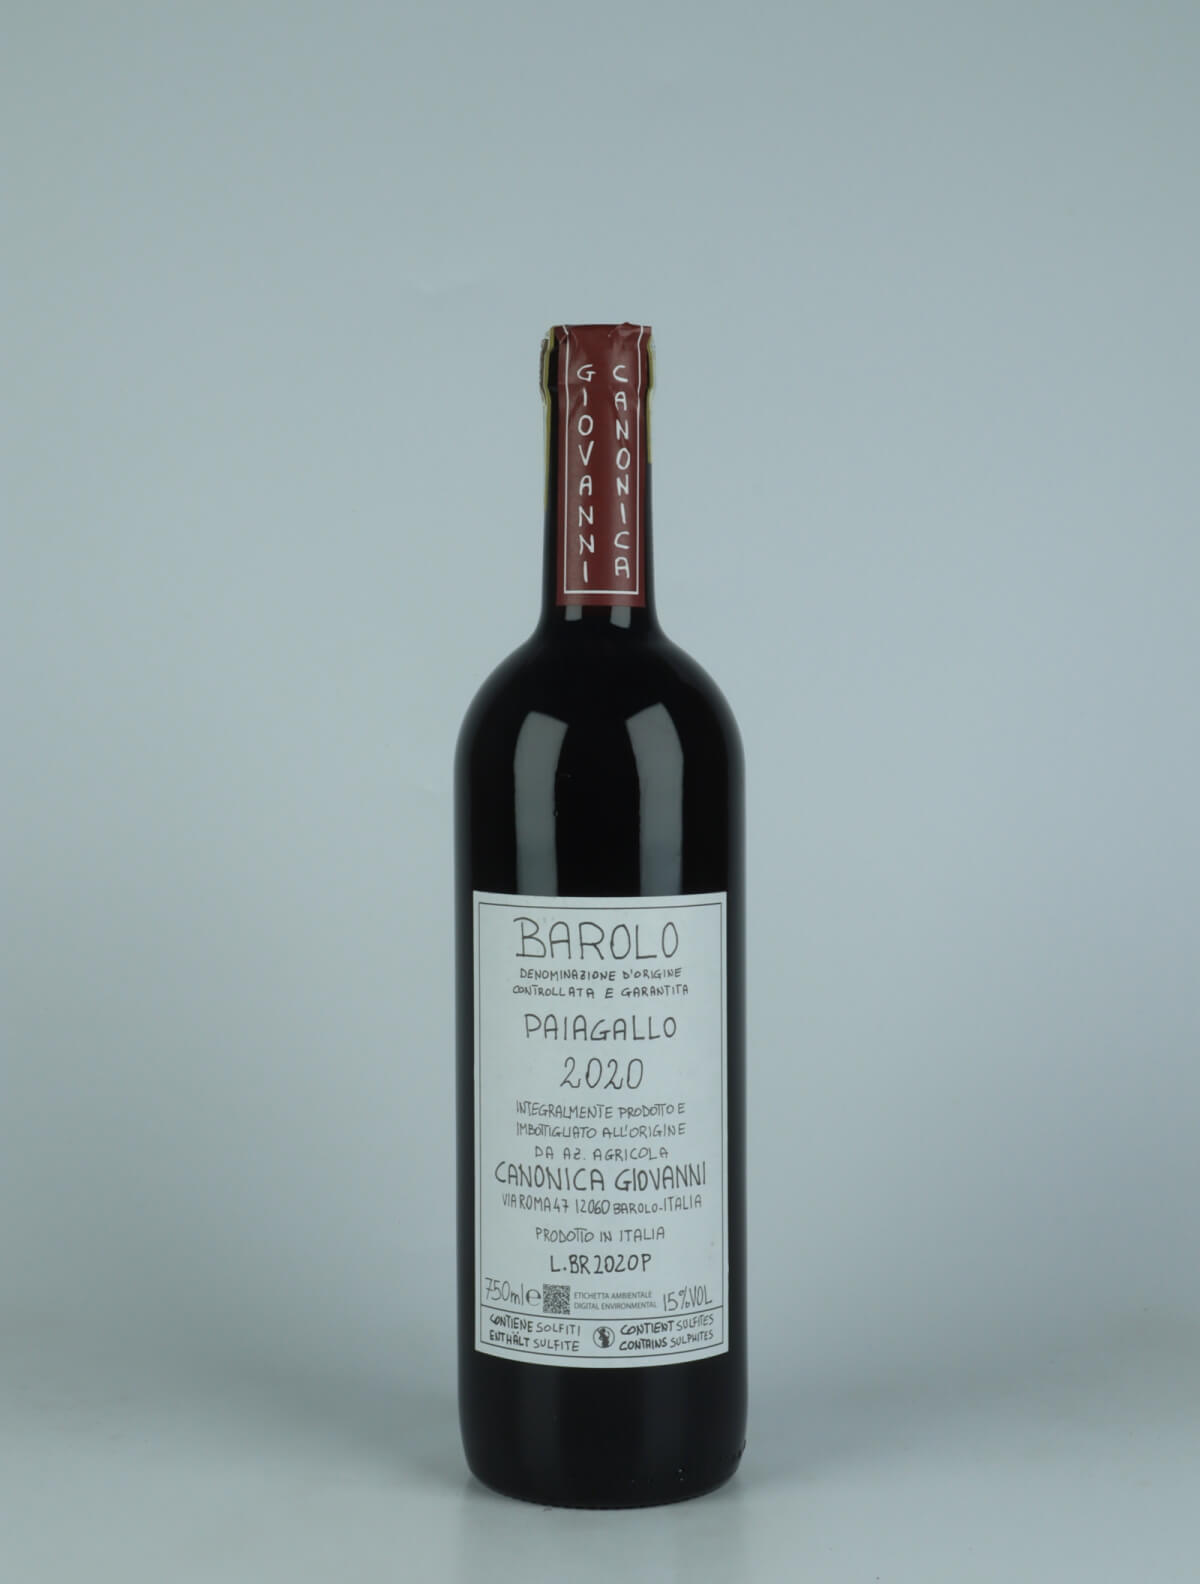 En flaske 2020 Barolo - Paiagallo Rødvin fra Giovanni Canonica, Piemonte i Italien